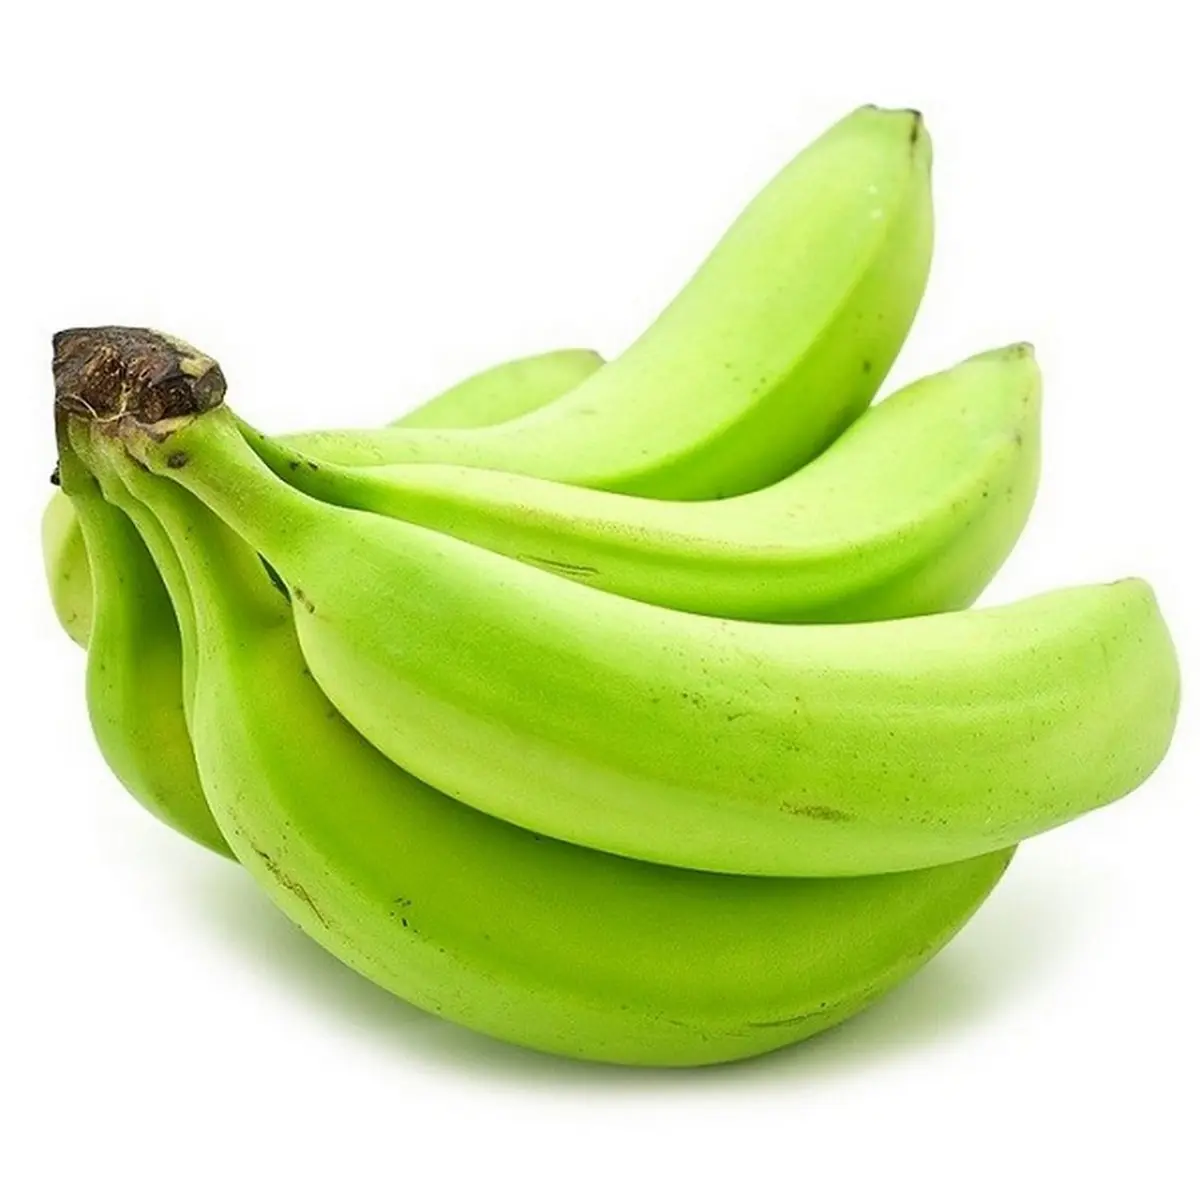 Fresh green cavendish banana